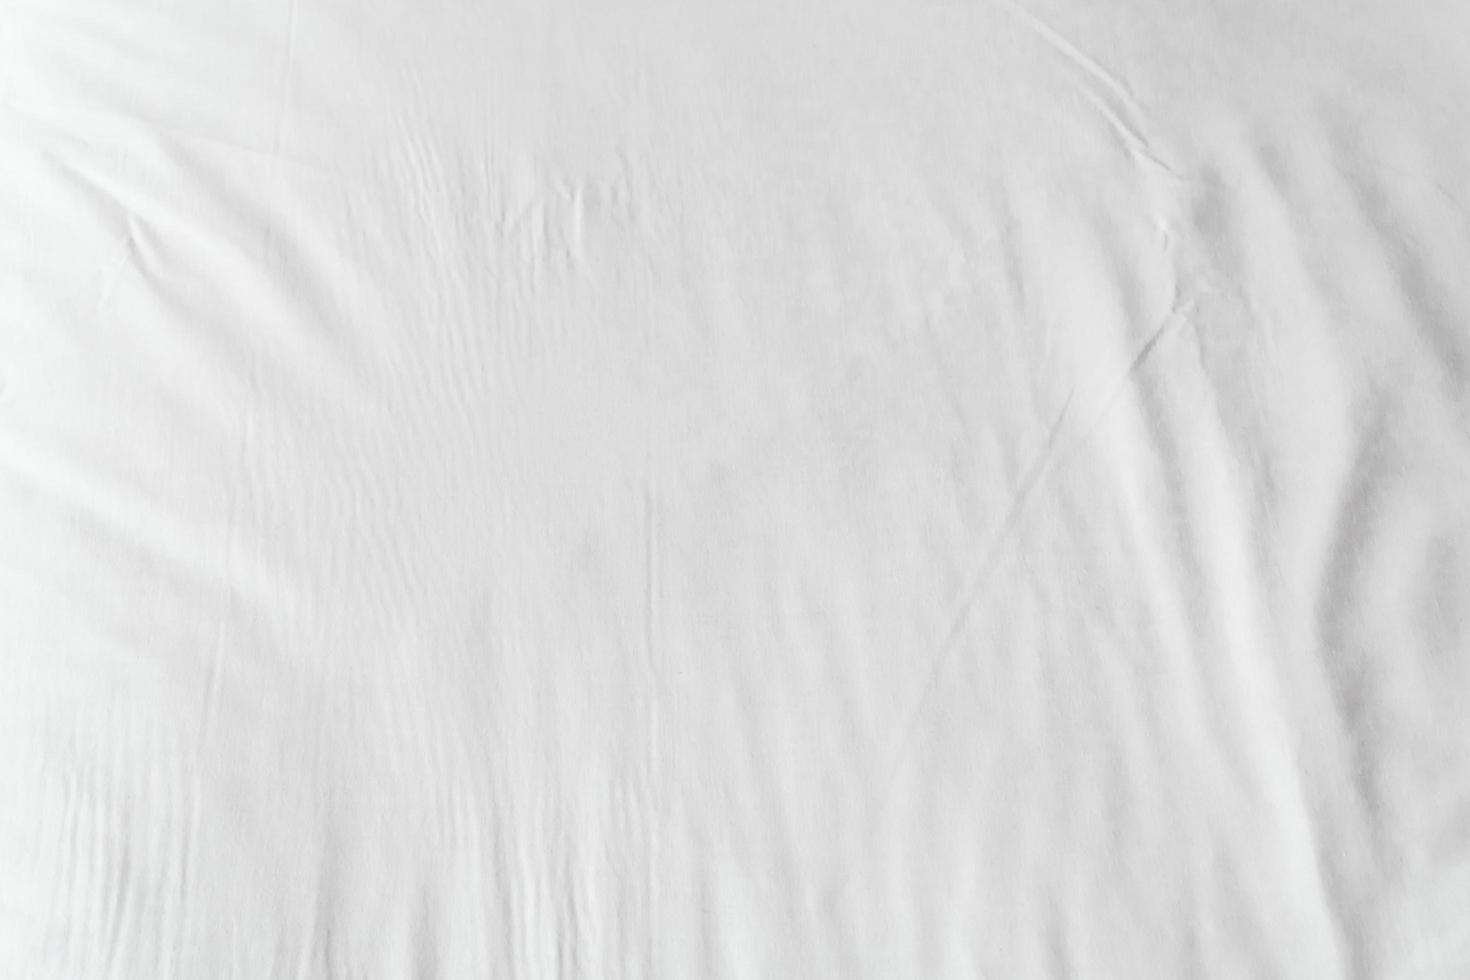 White cotton fabric texture. Clothes cotton photo